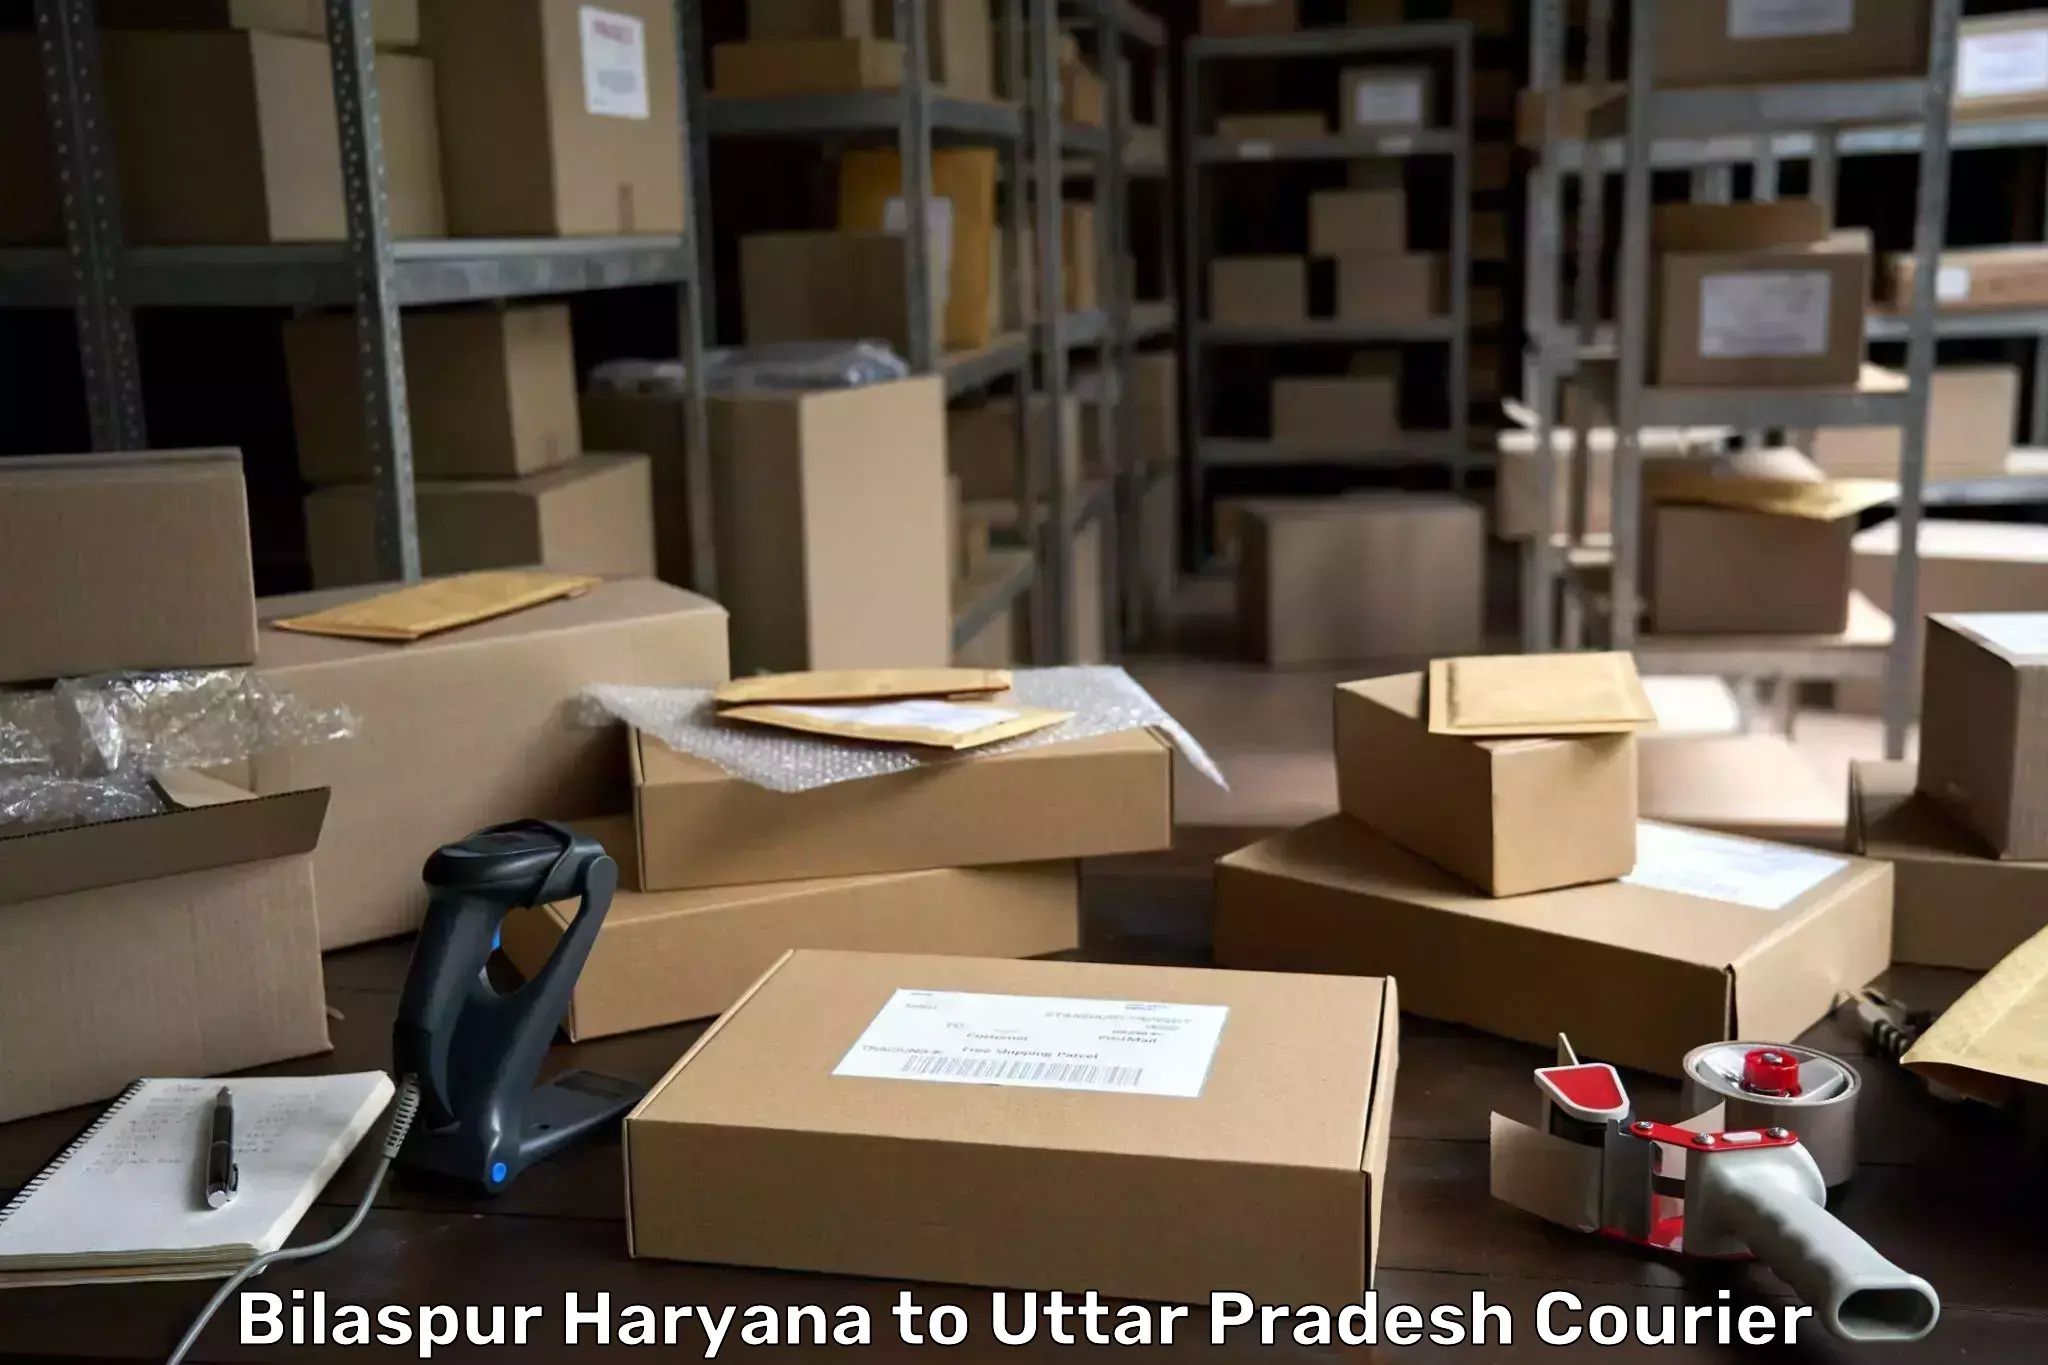 Courier service comparison Bilaspur Haryana to Harpalpur